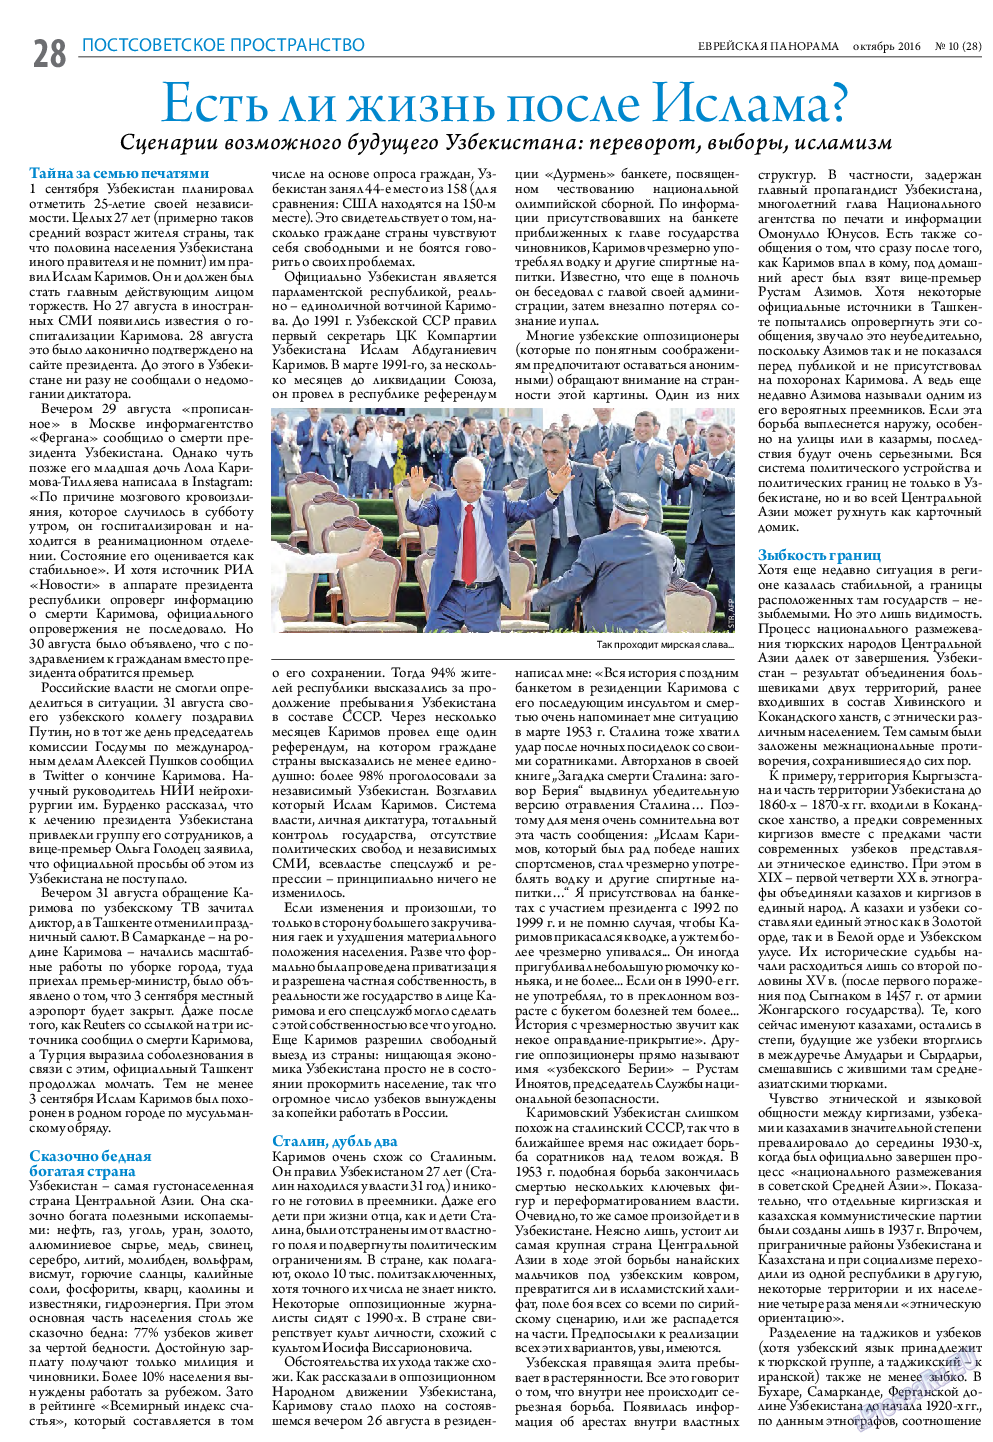 Еврейская панорама, газета. 2016 №10 стр.28